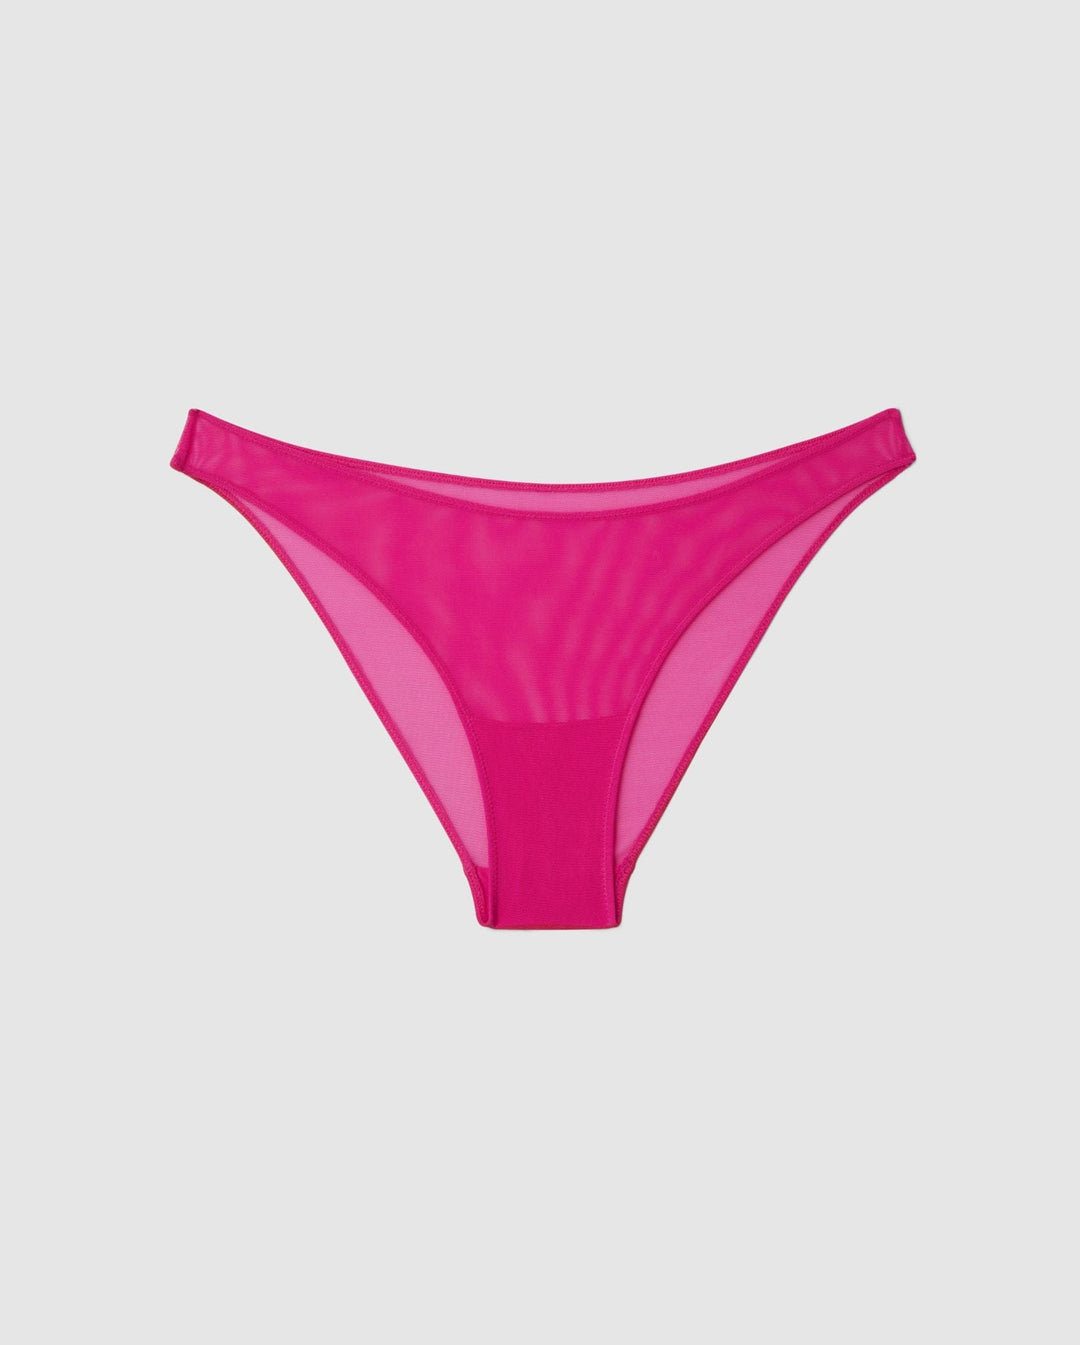 Victoria's Secret VS PINK Assorted Size XS Panties - Lot of 4